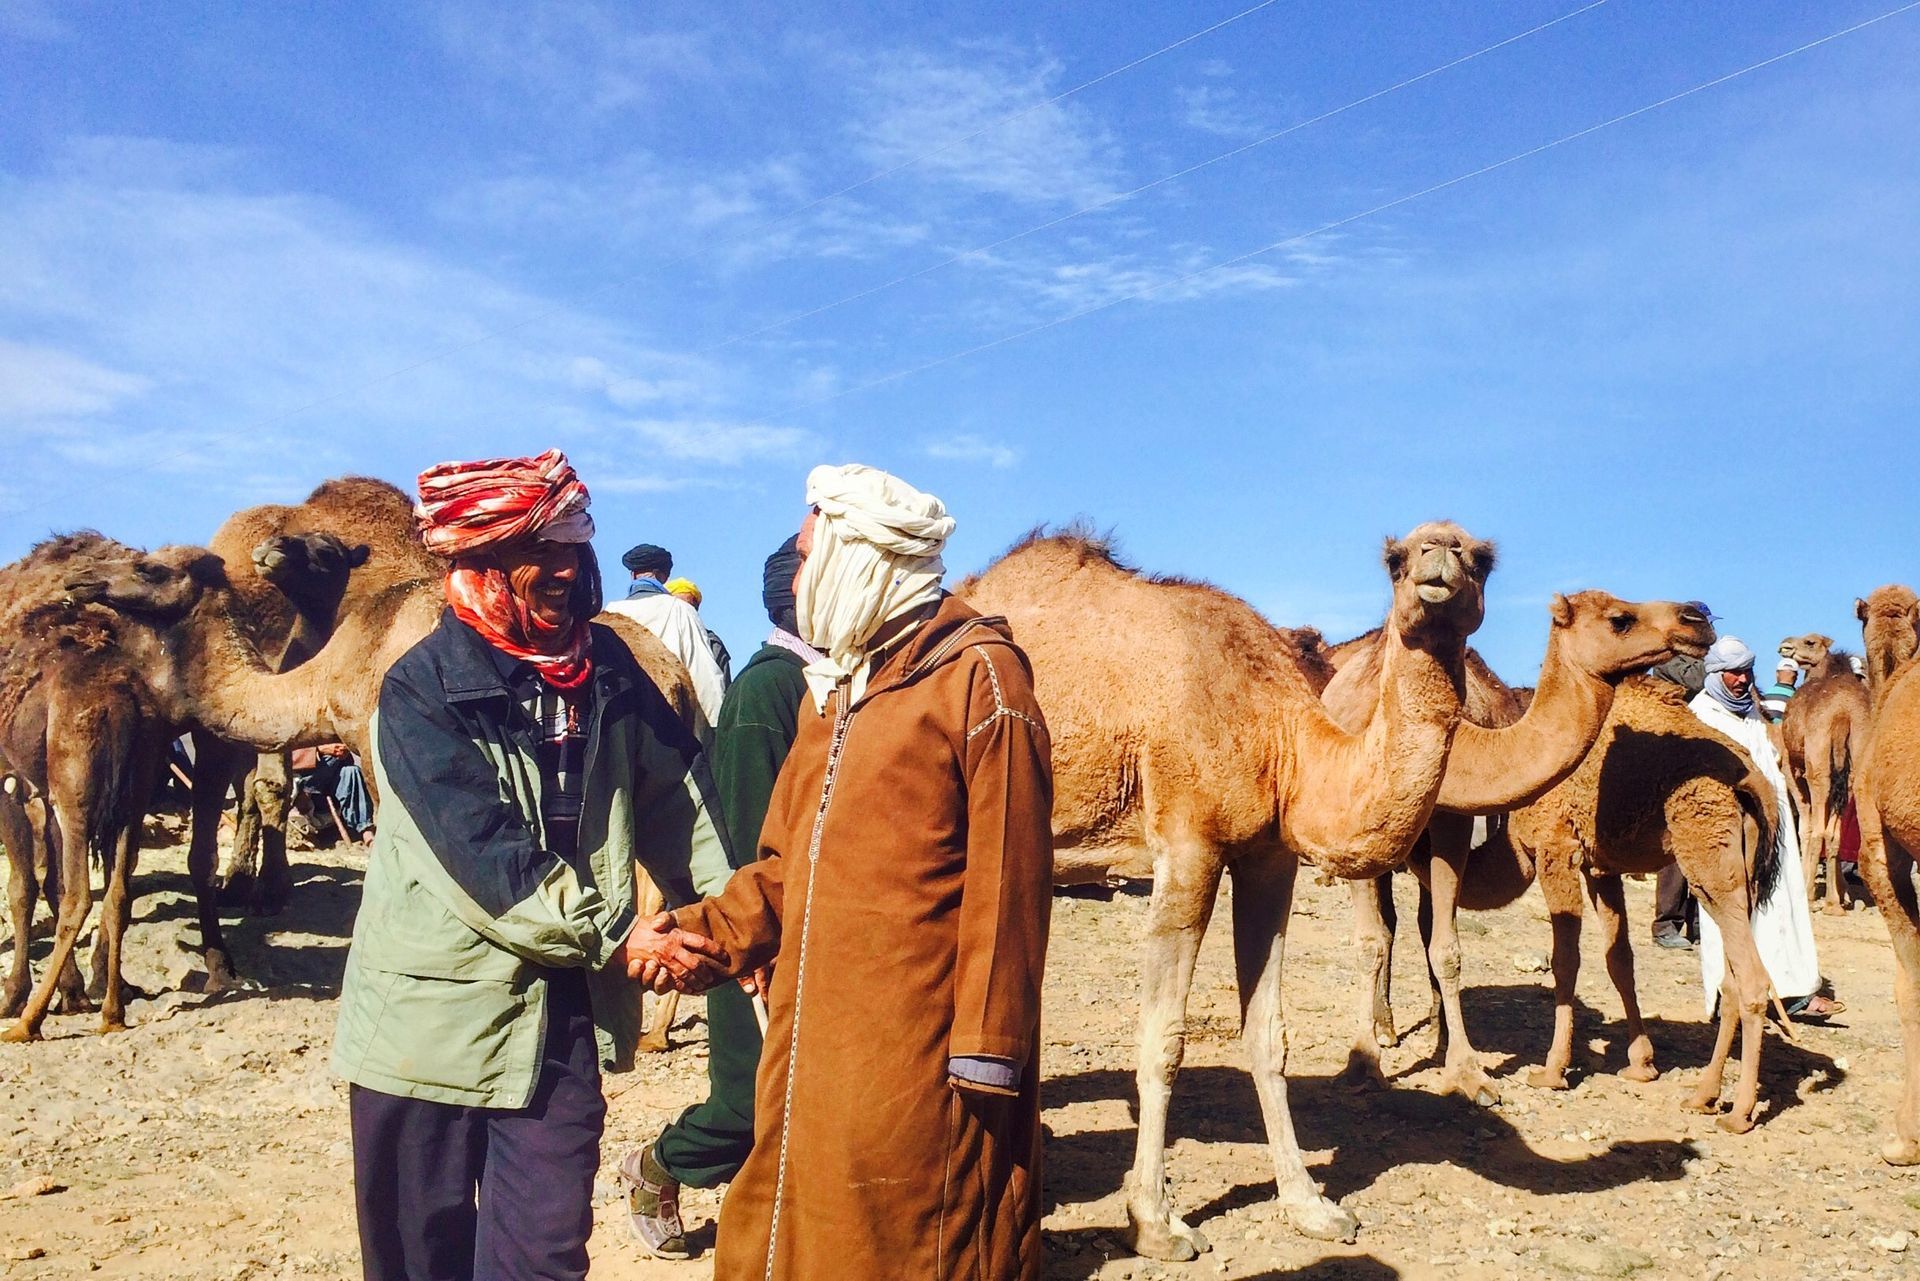 Camel market in Imilchil